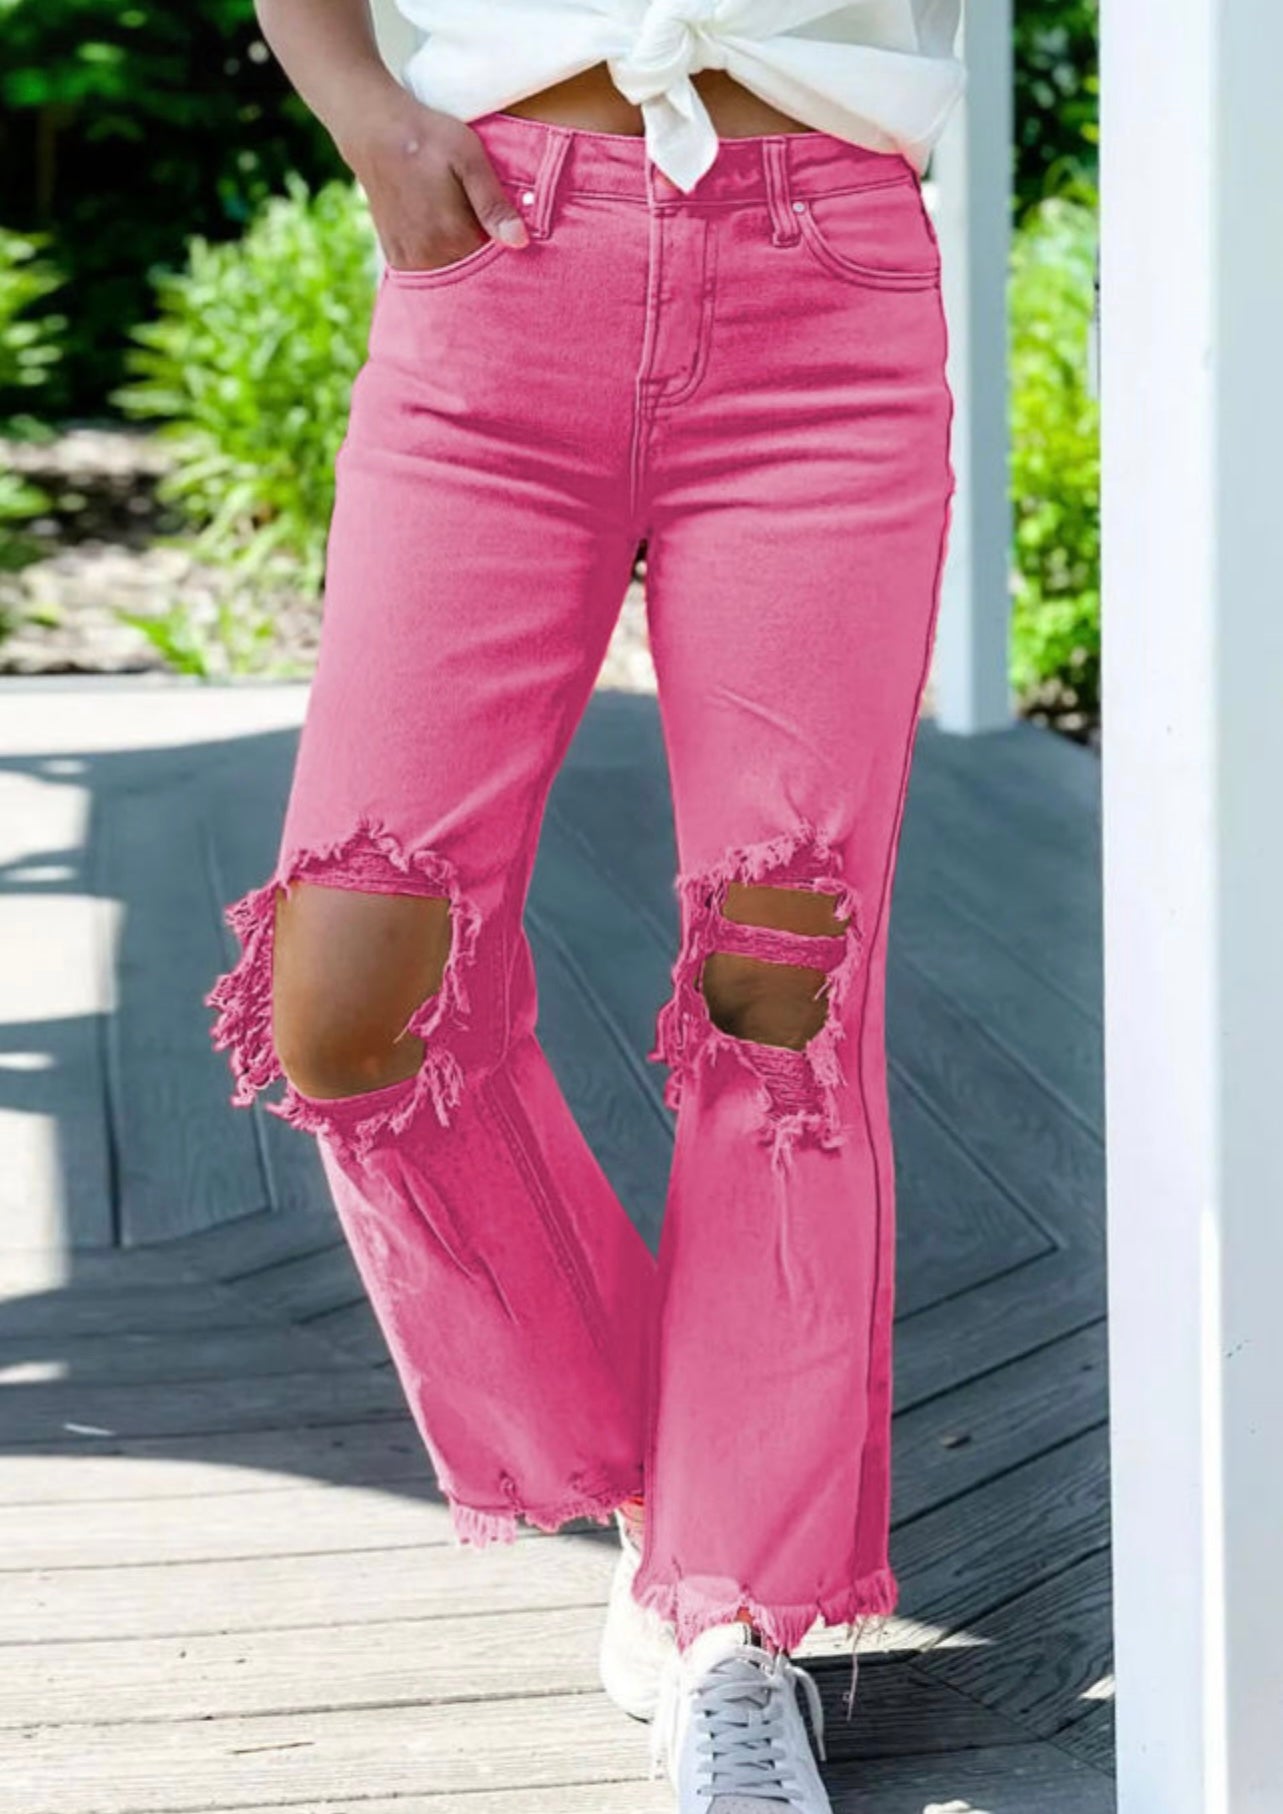 pink denim jeans